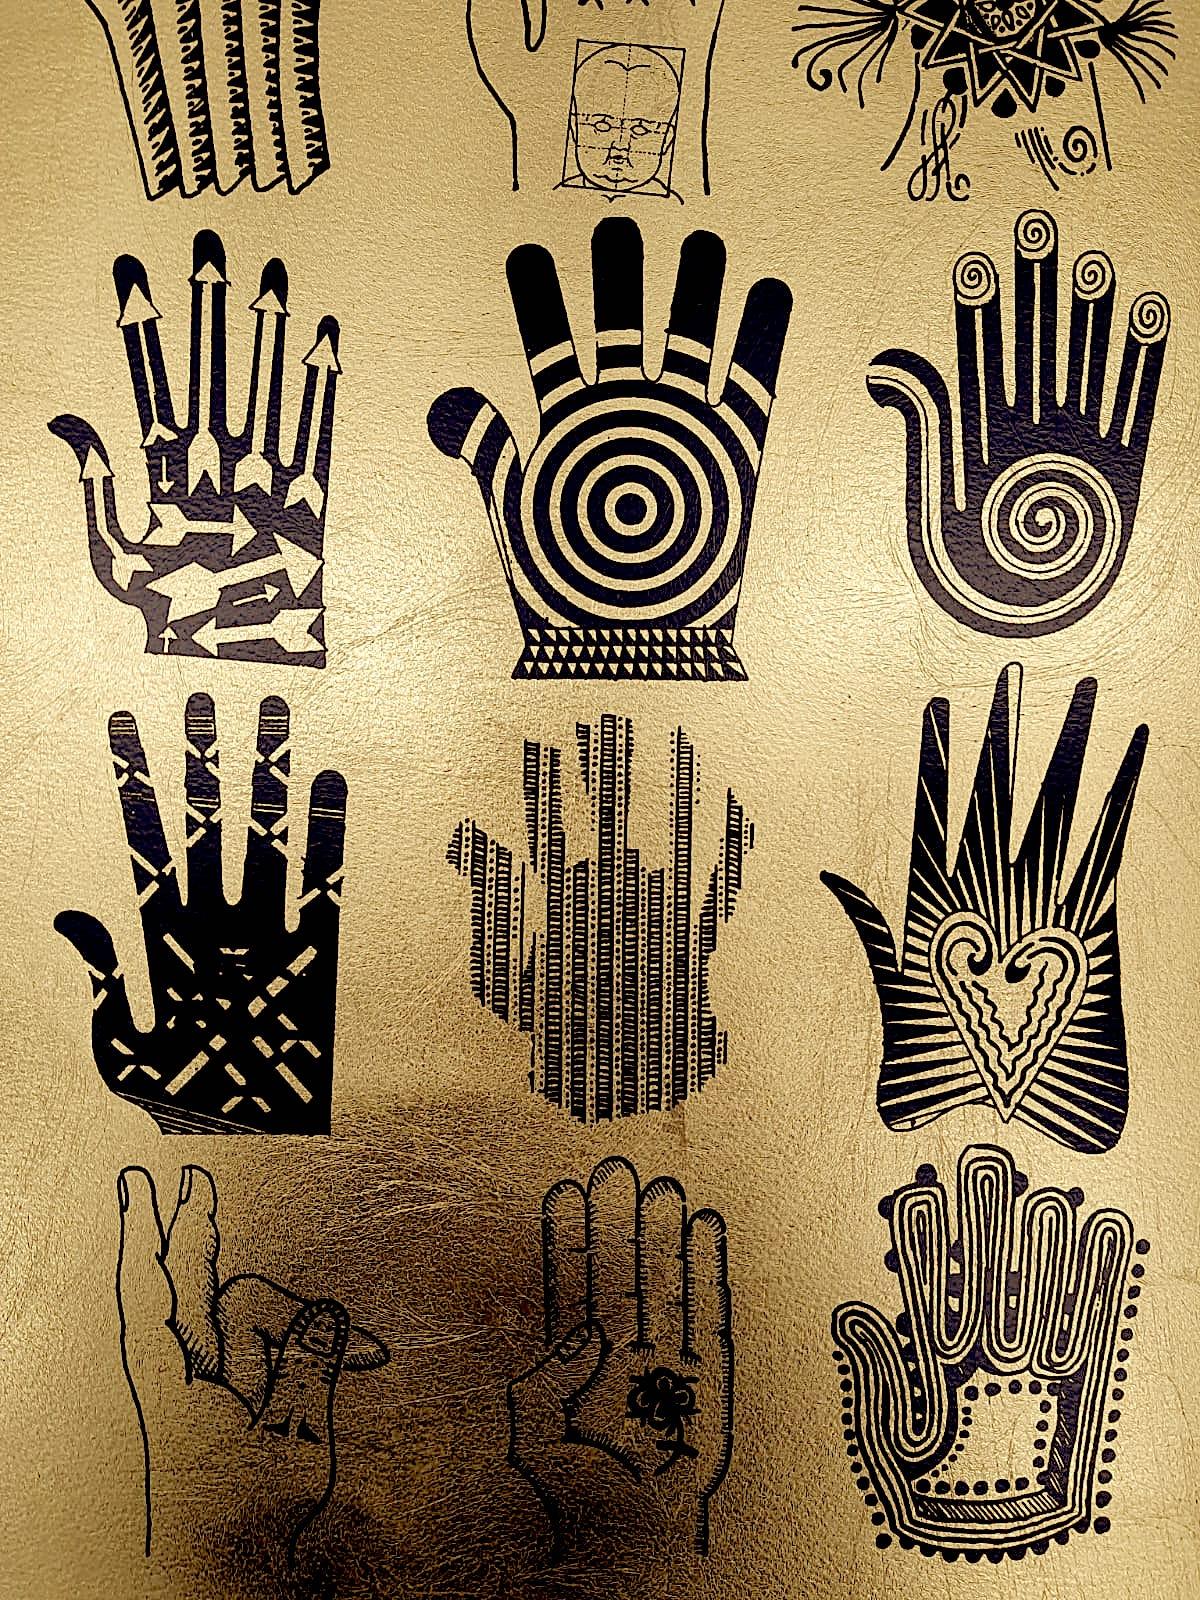 Golden hands - Print by Pedro Friedeberg